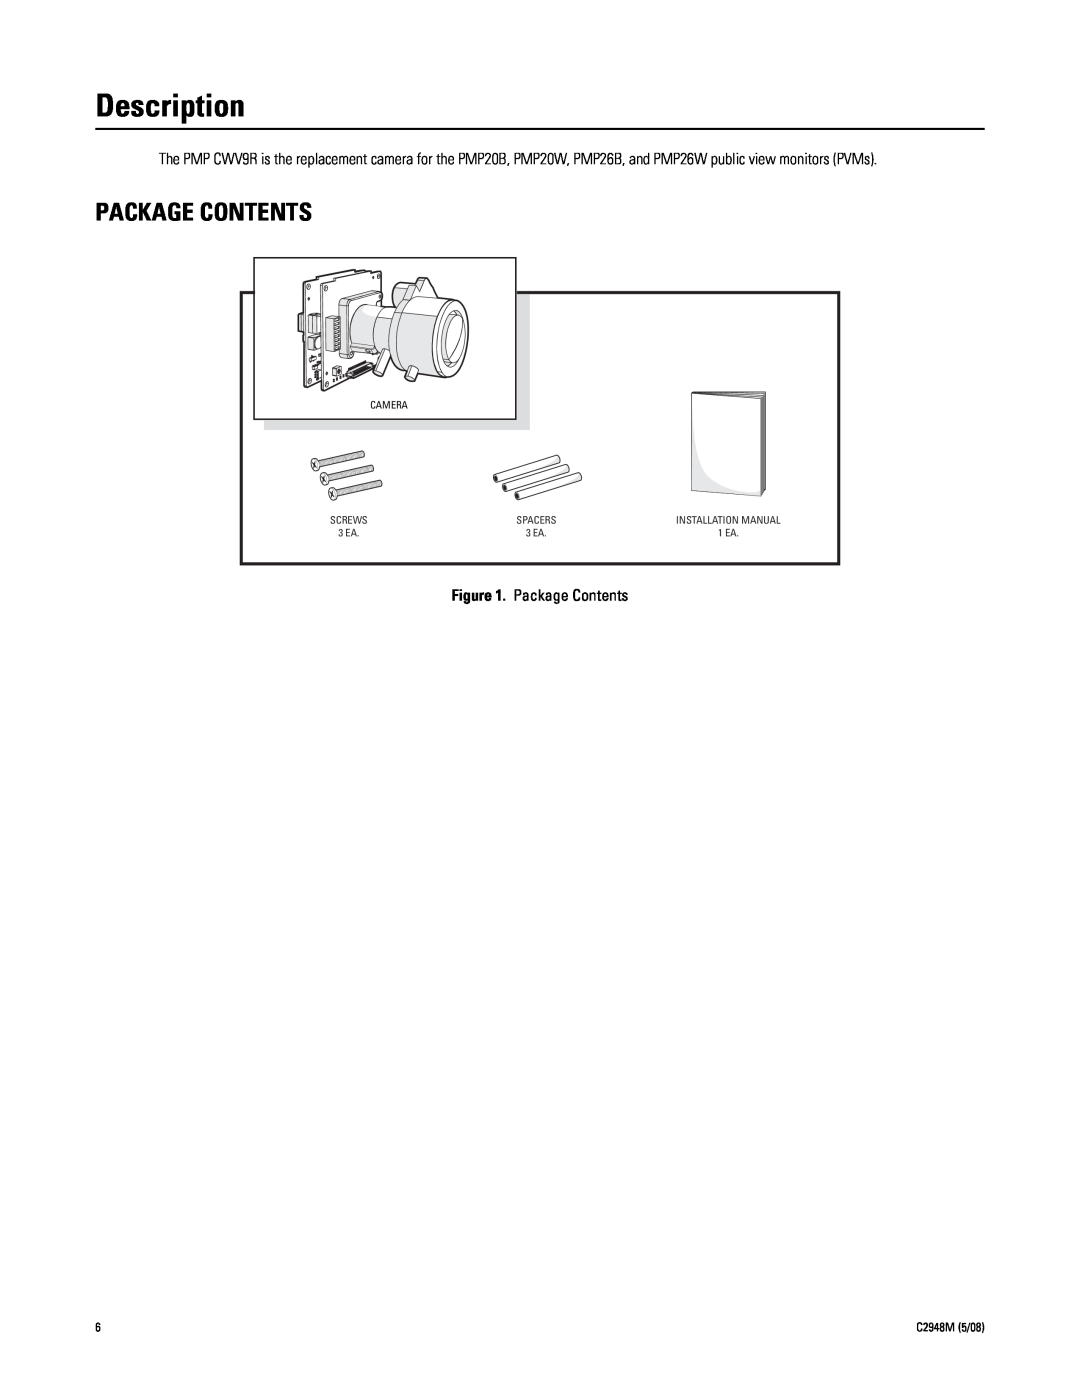 Pelco pmp-cwv9r manual Description, Package Contents, Screws, Spacers, Installation Manual, 3 EA, 1 EA 